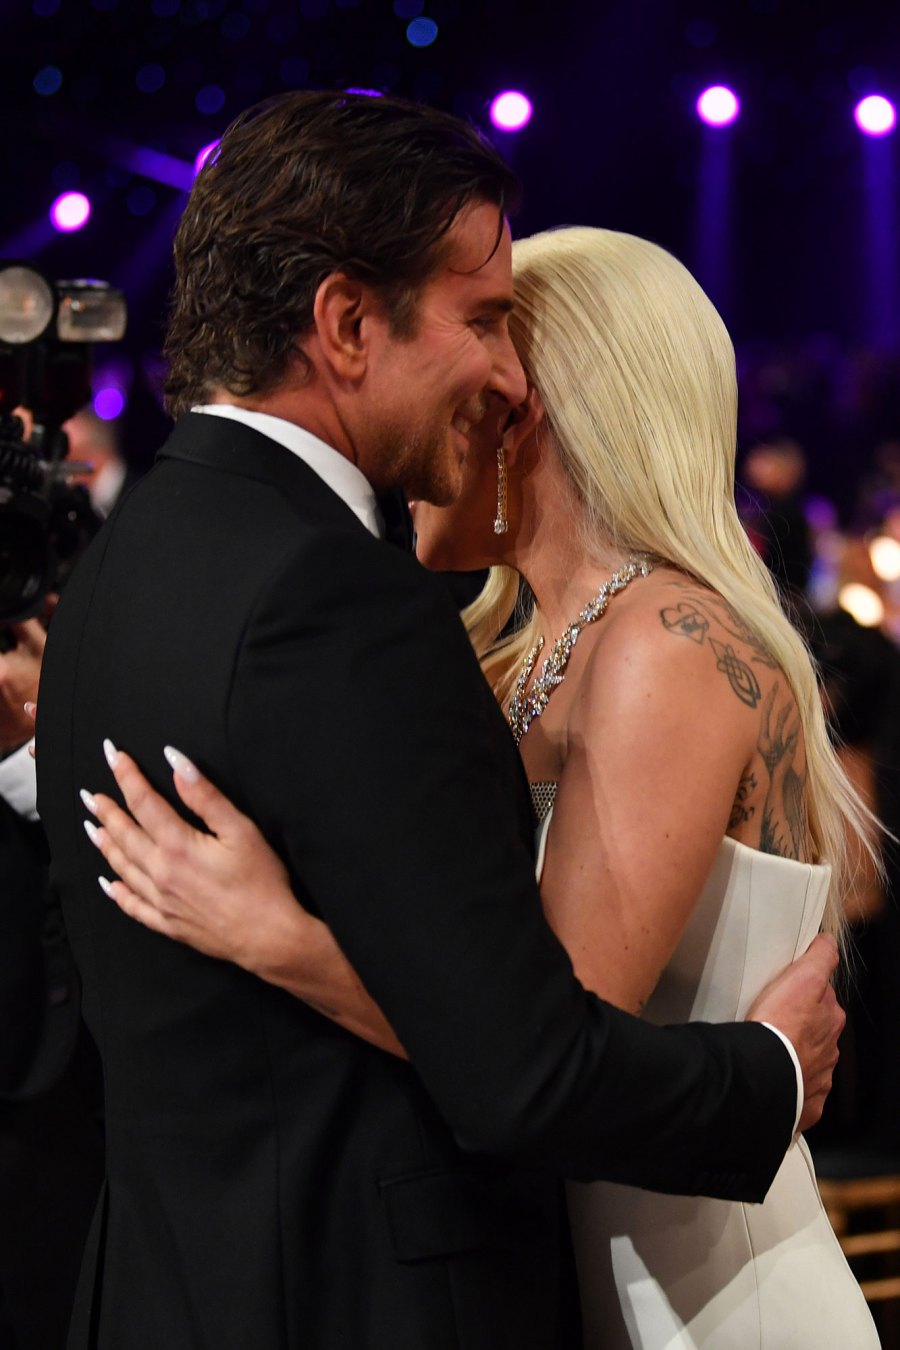 A Star Is Born Costars Lady Gaga and Bradley Cooper Share a Big Hug at the 2022 SAG Awards